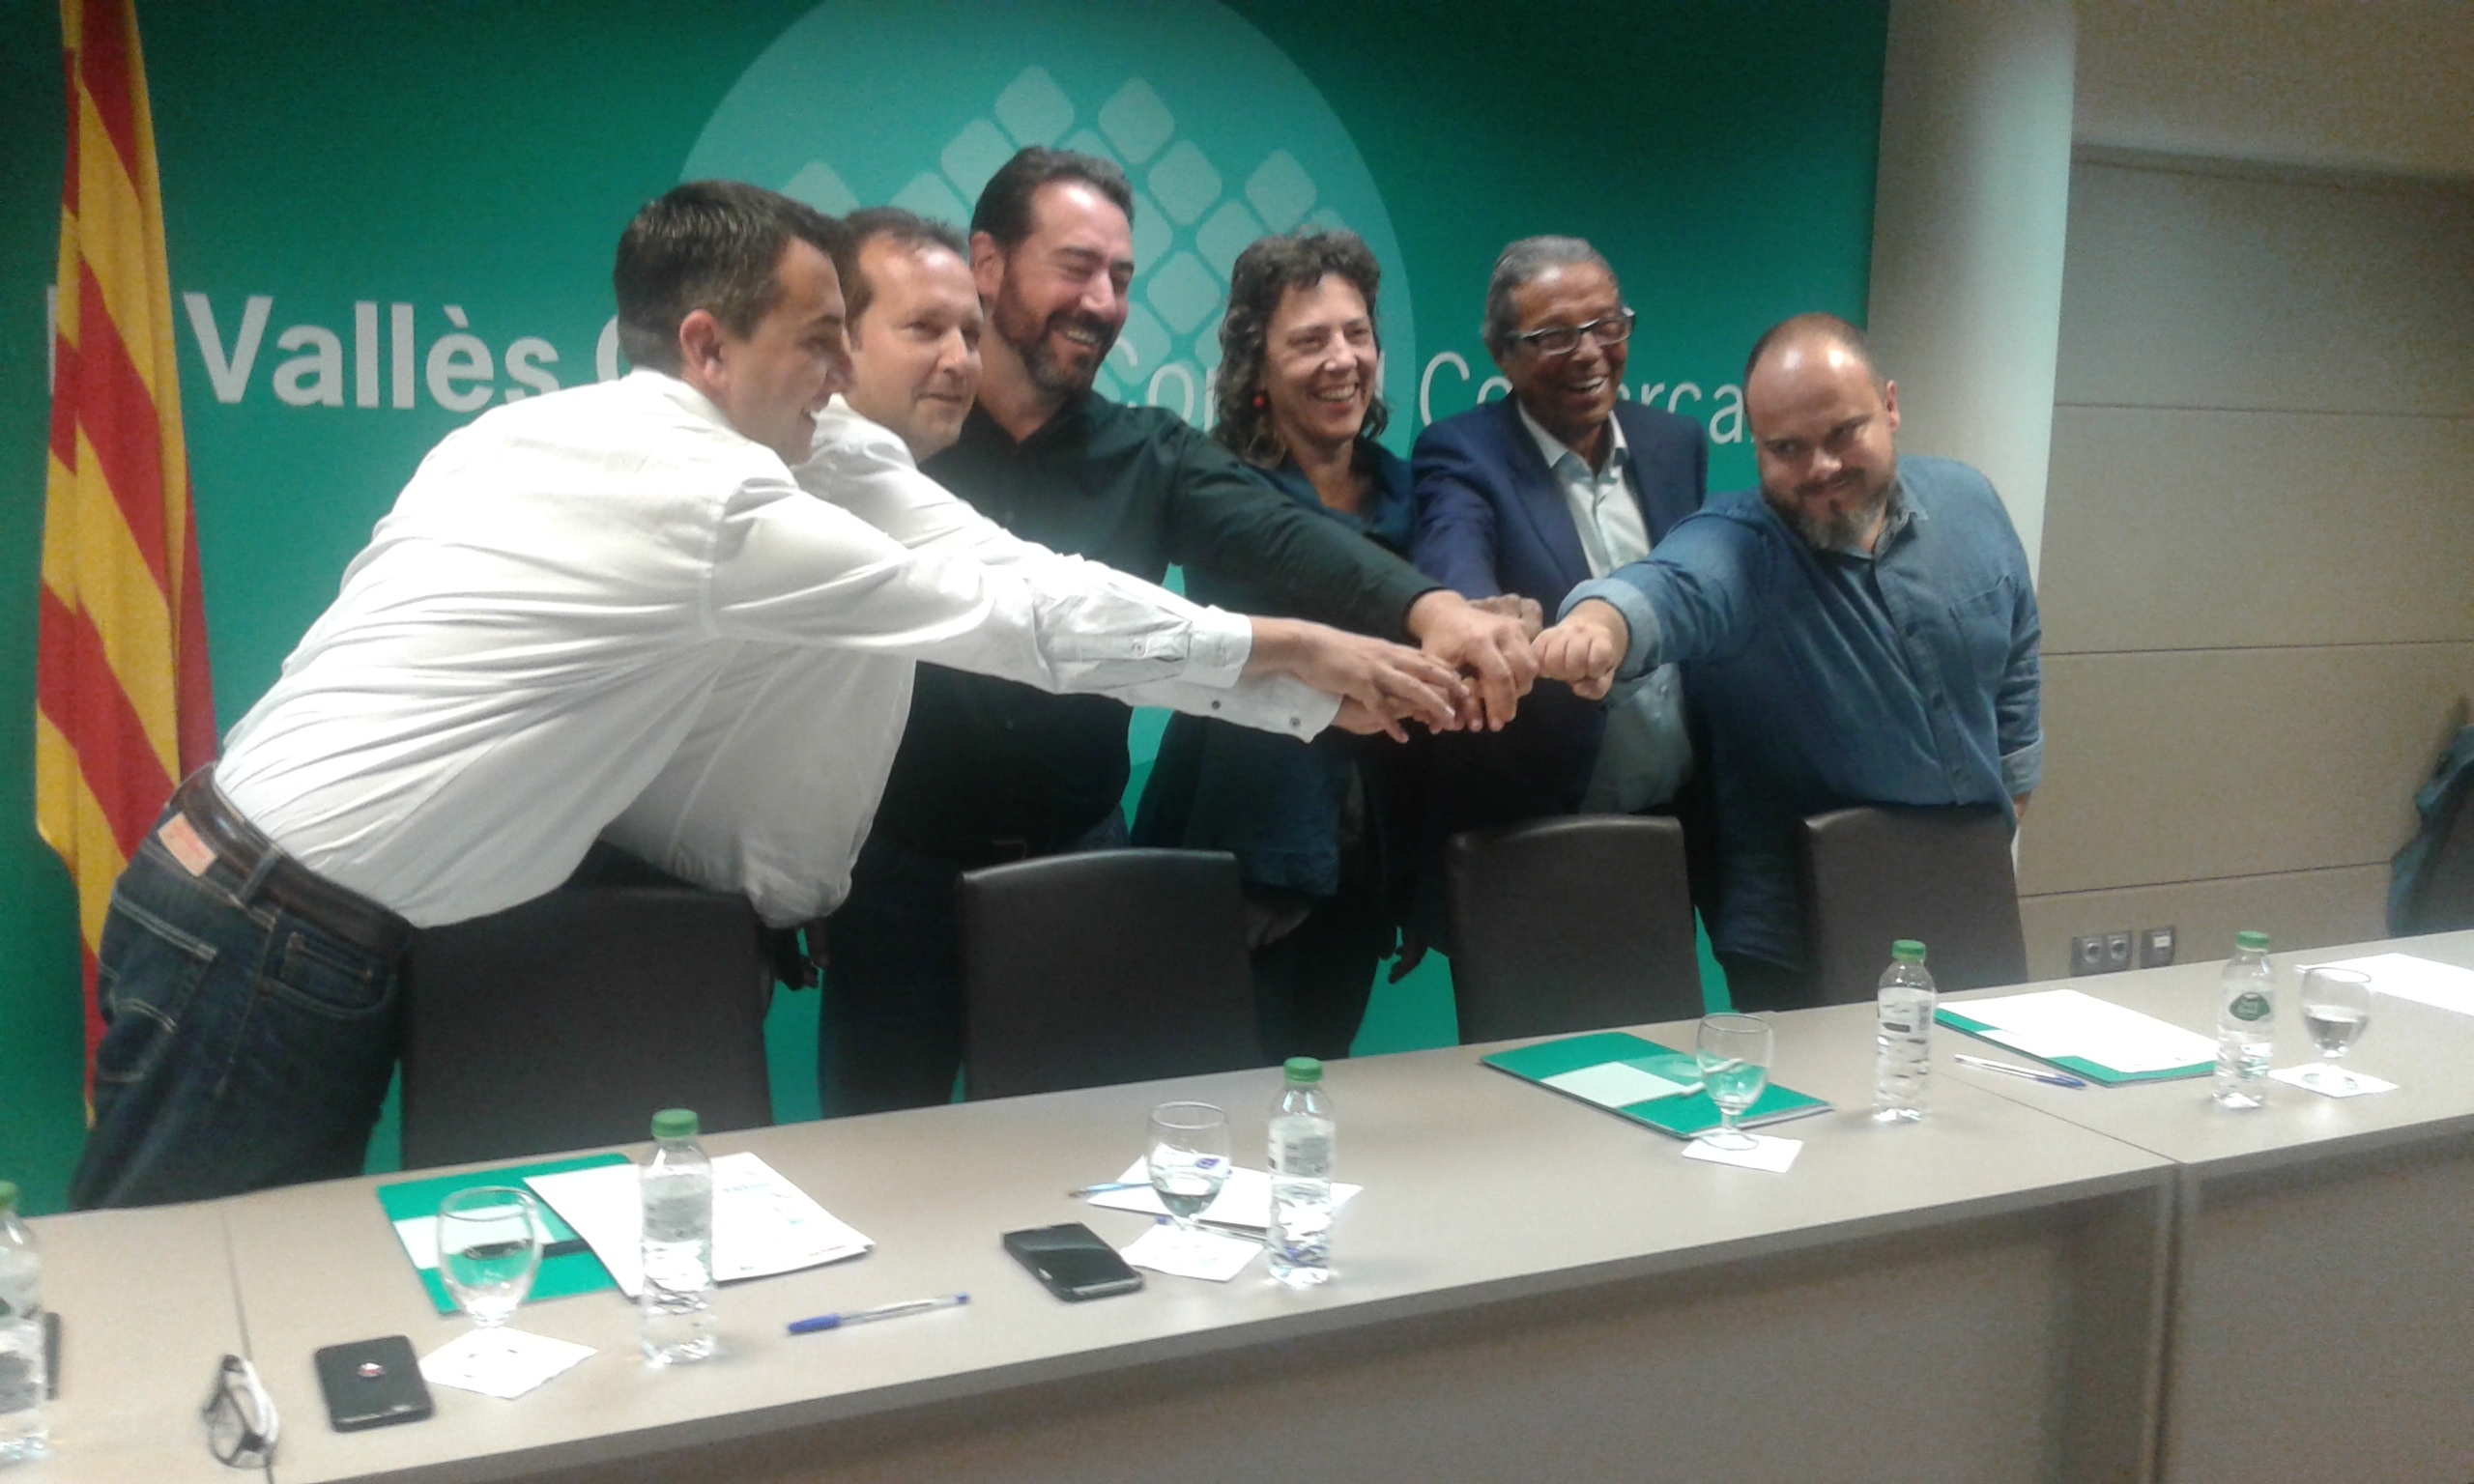 Òscar Riu (UGT), Joaquim Colom (UEI), David Ricart i Núria Hernández (Consell Comarcal), Vicenç Paituví (Pimec) i Gonzalo Plata (CCOO) després de firmar l'acord